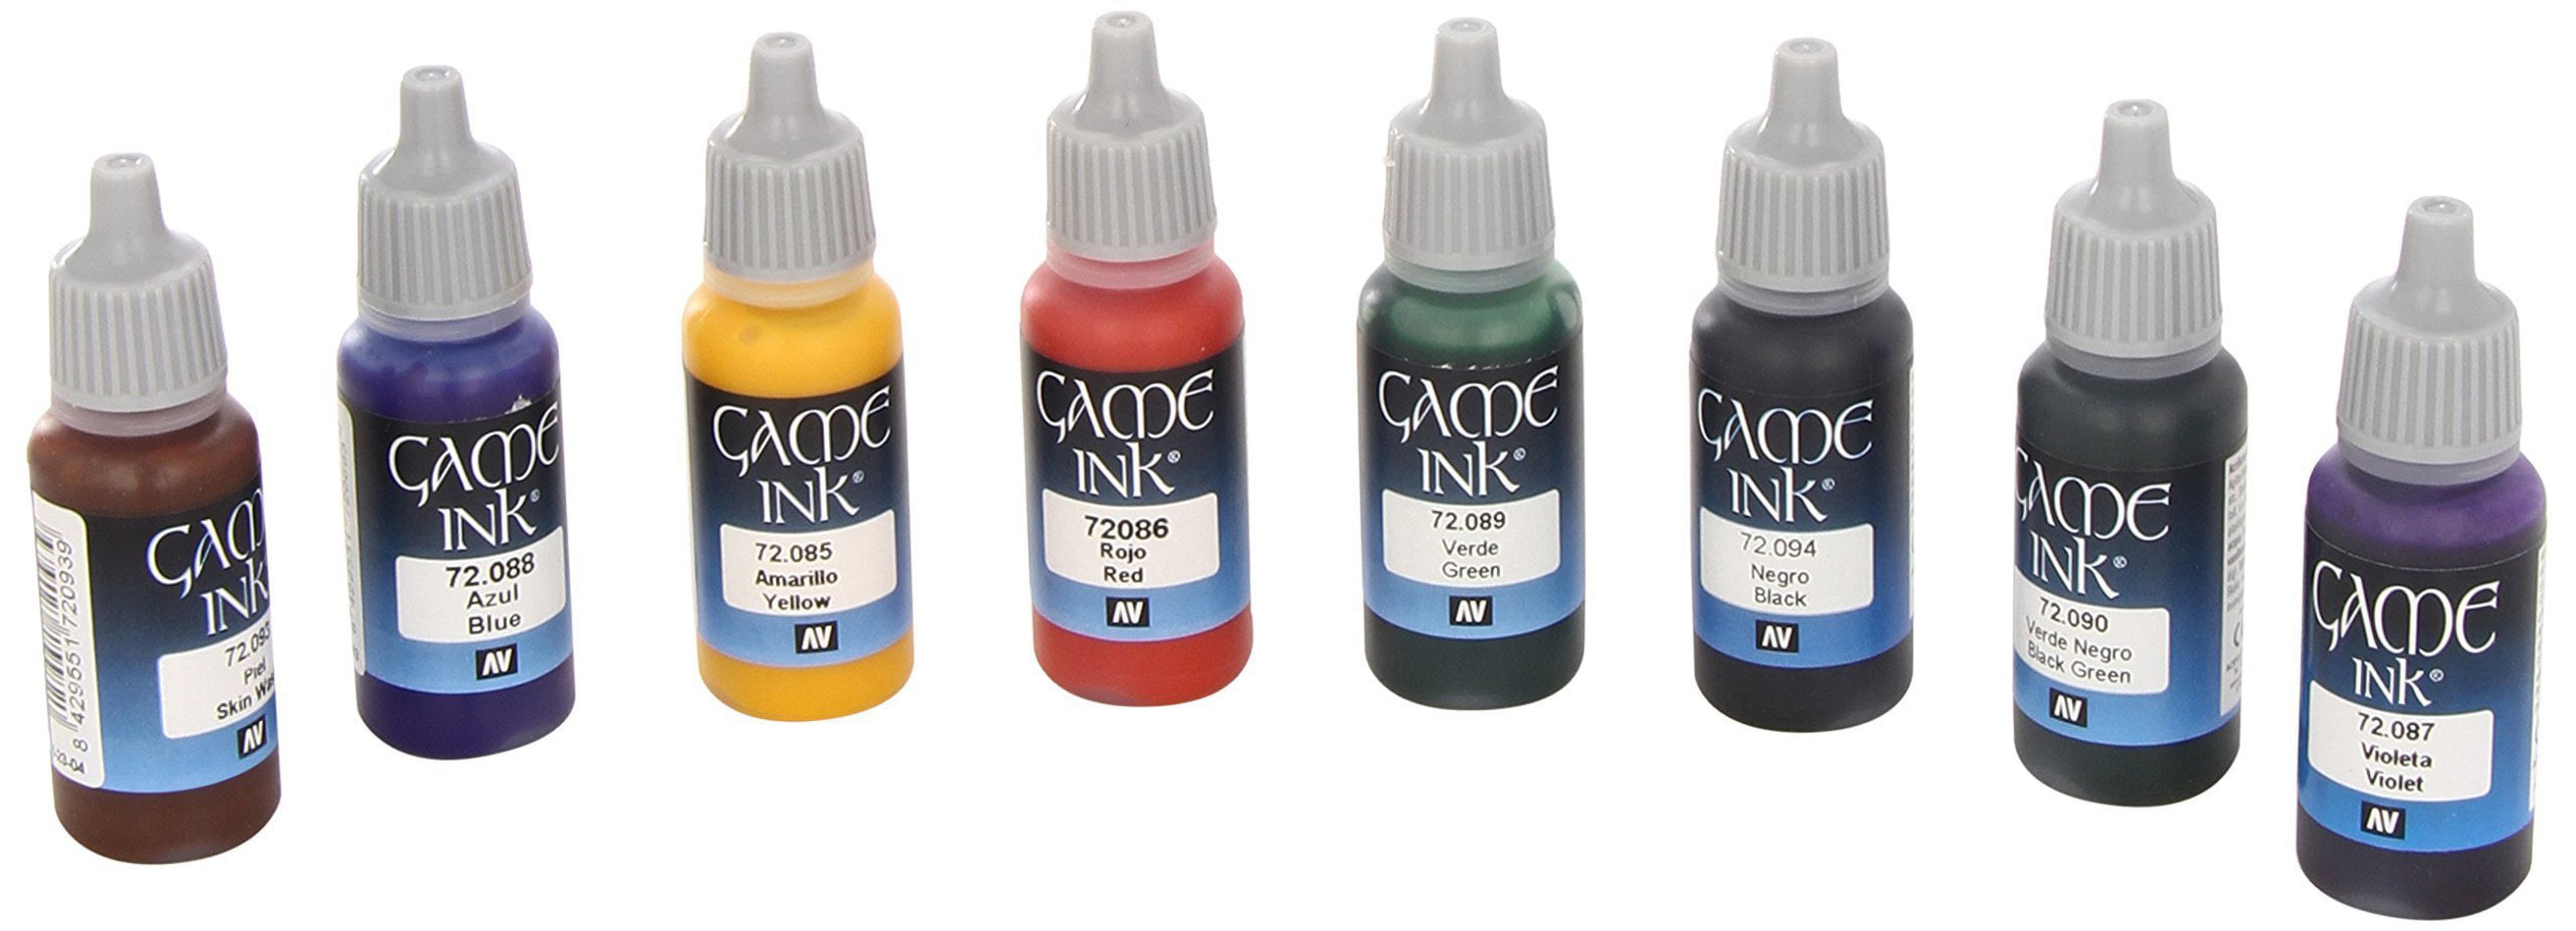 Vallejo Game Ink Paint Set (8 Color) Paint